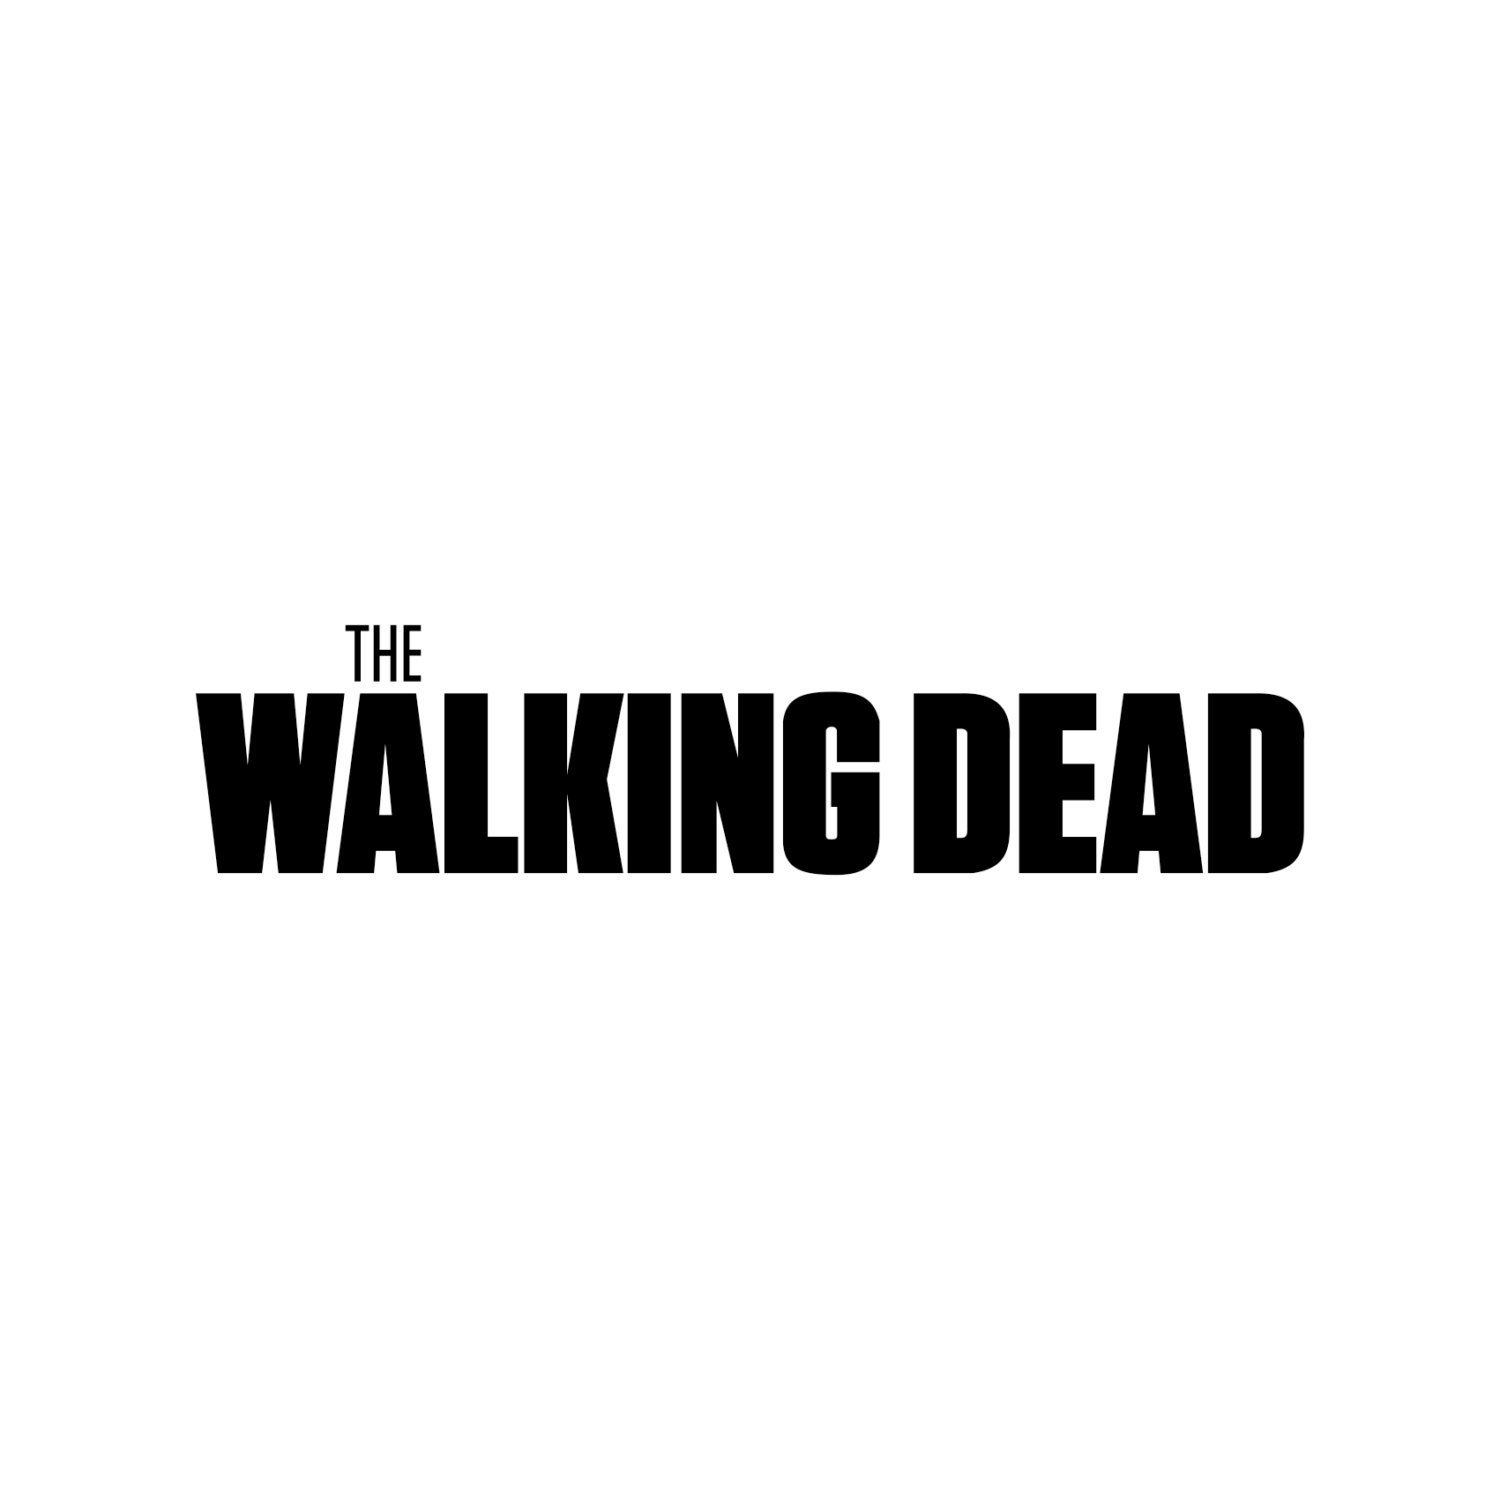 Download The Walking Dead graphics design SVG DXF EPS by VectordesignStudio